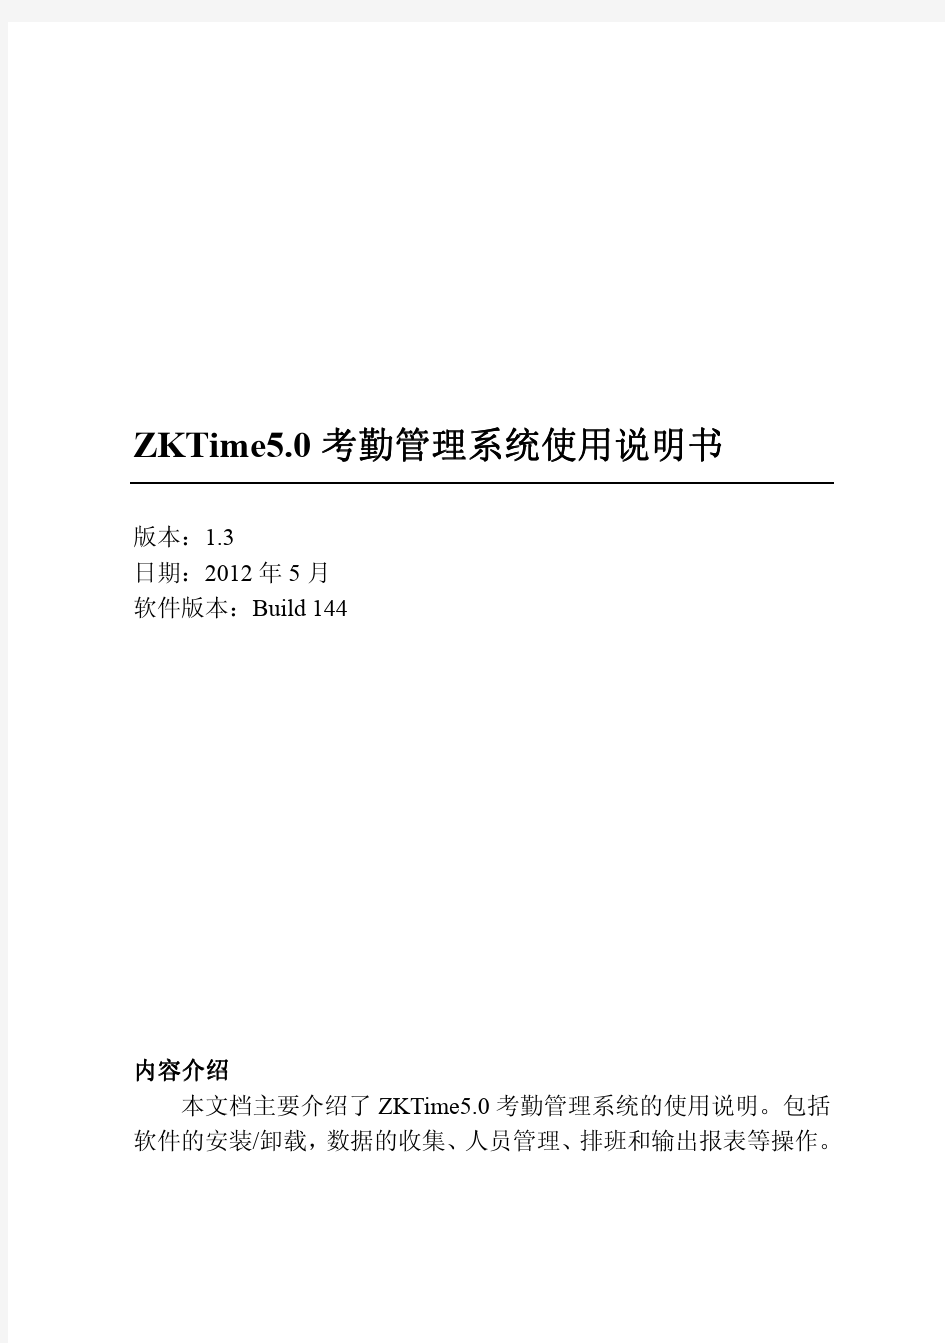 ZKTime5.0考勤管理系统使用说明书(1.3版)